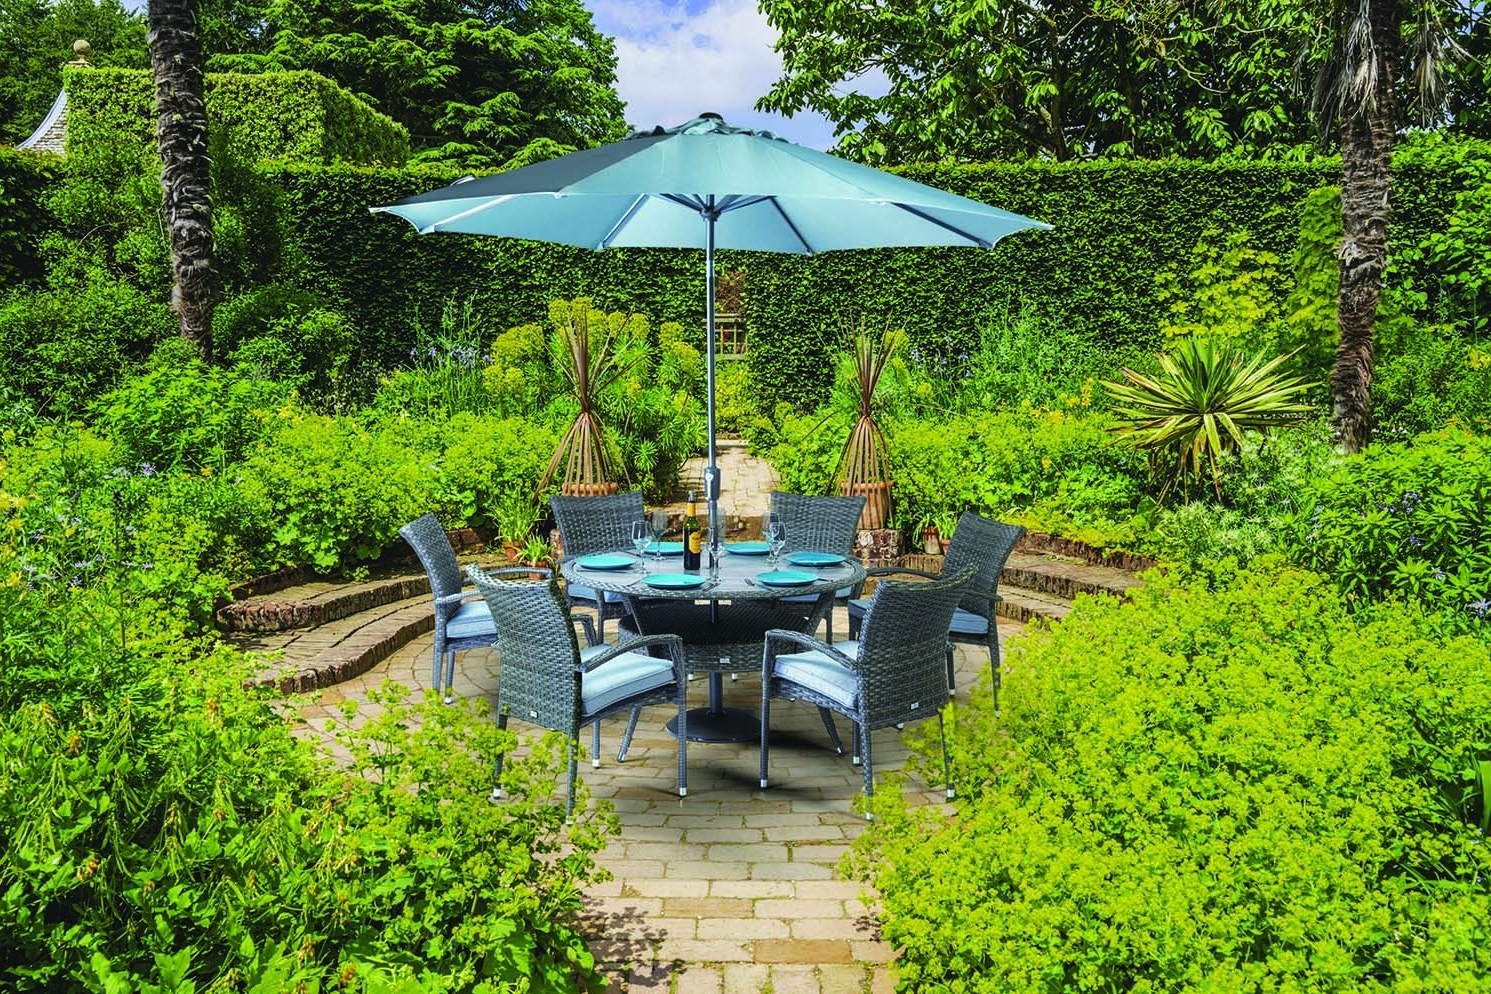 Introducing: Supremo Leisure garden furniture